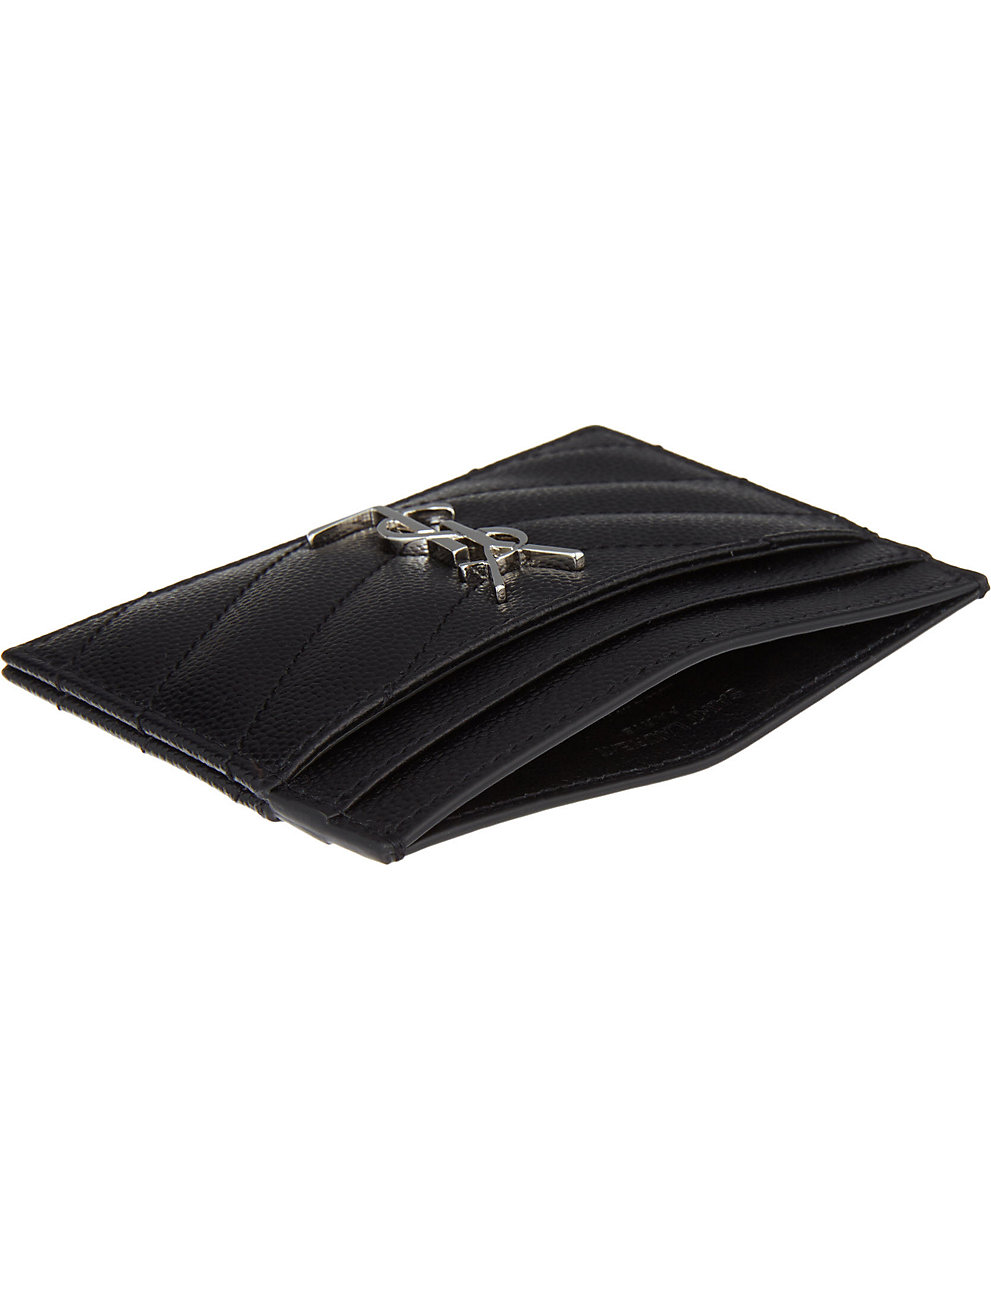 SAINT LAURENT - Monogram quilted leather cardholder